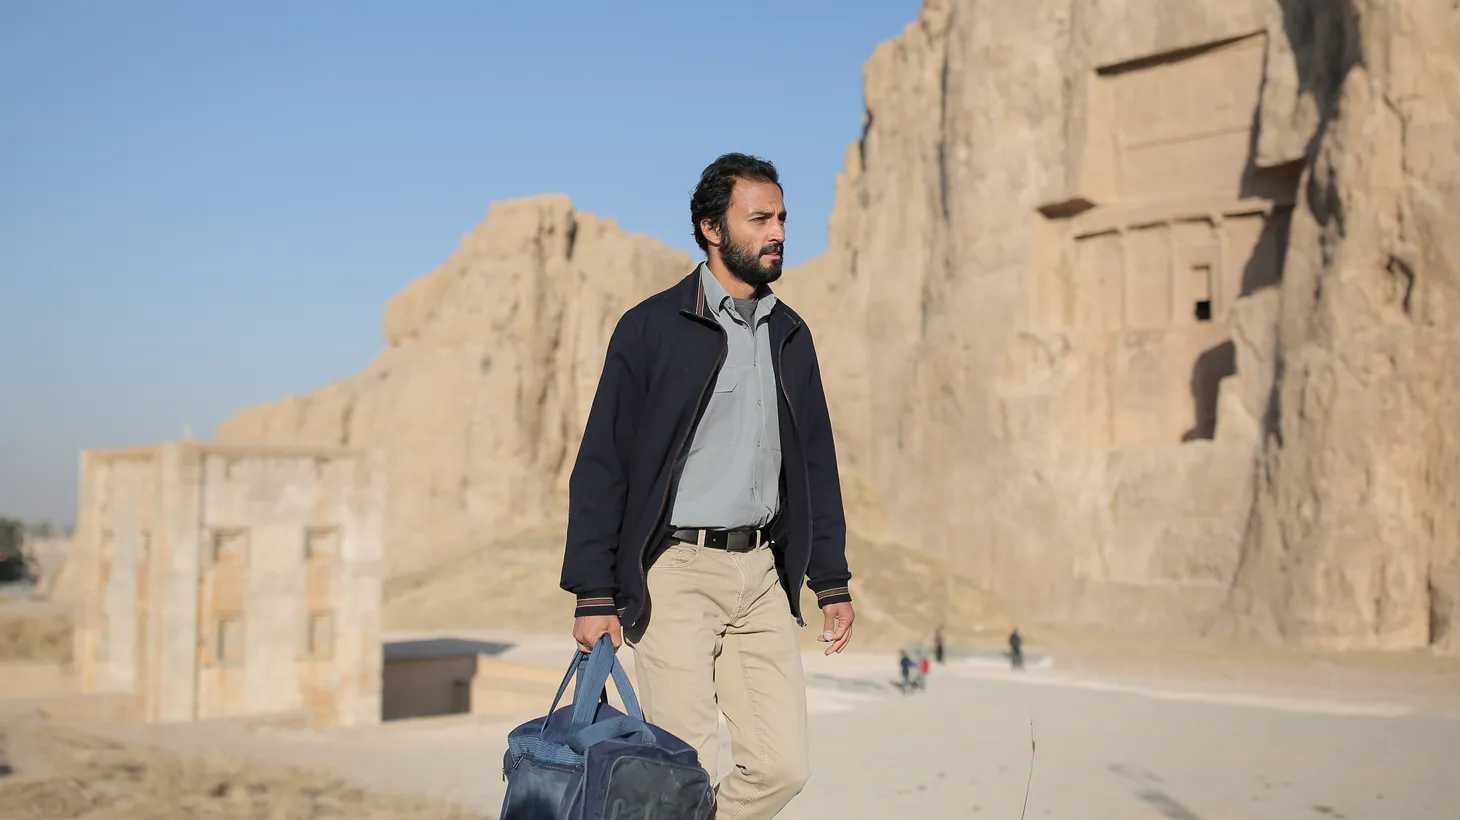 Amir Jadidi plays Rahim Soltani in “A Hero,” from Iran’s Oscar-winning director Asghar Farhadi.